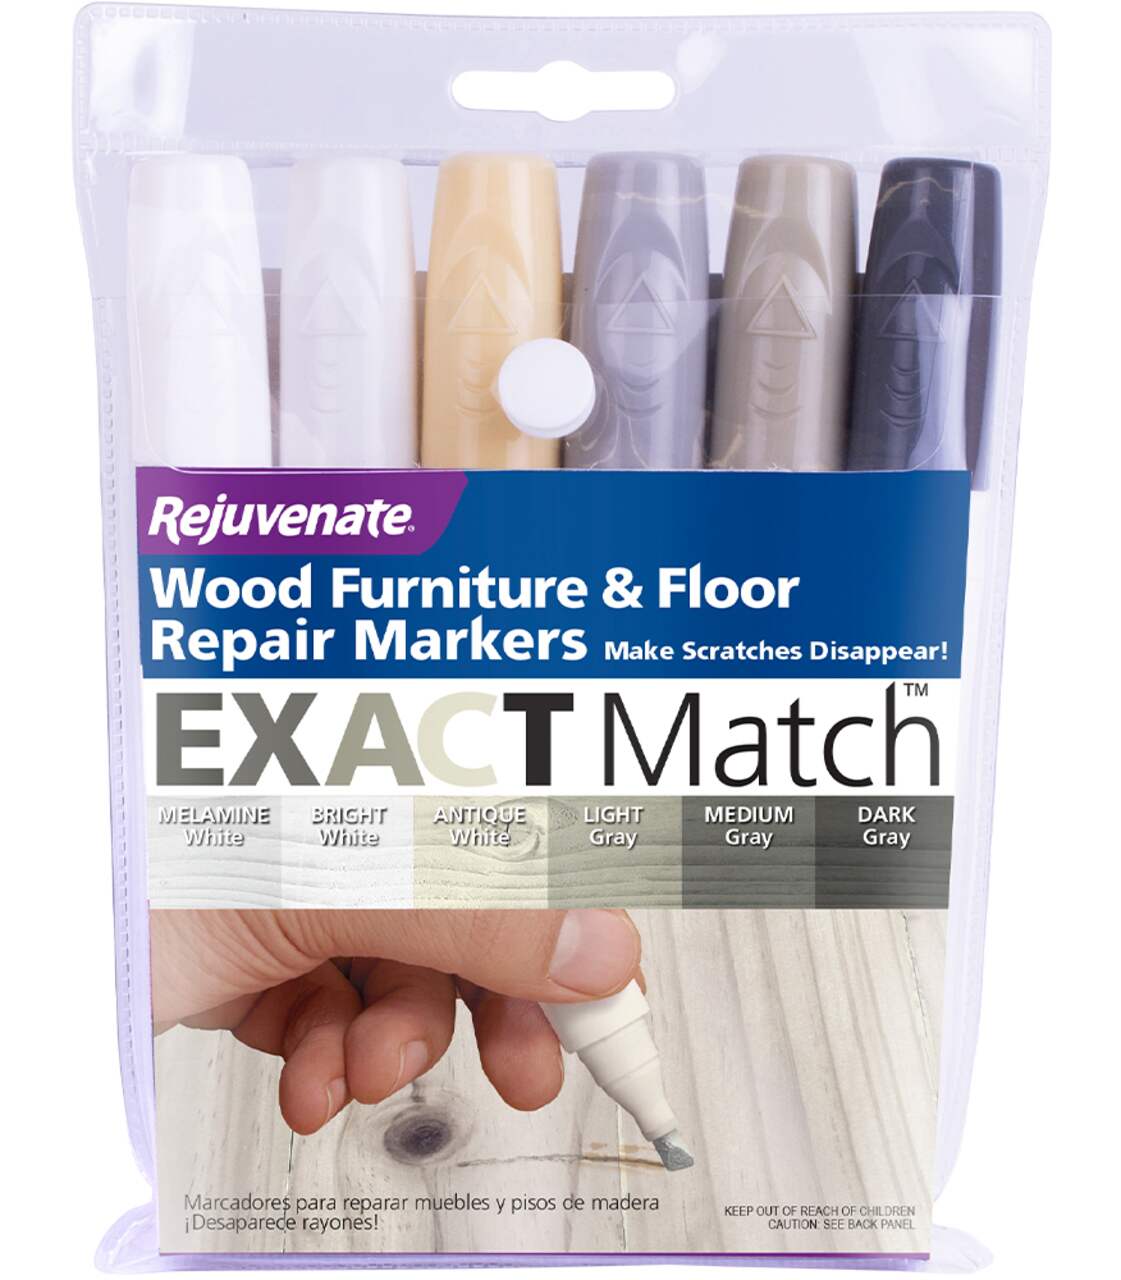 Rejuvenate Exact Match Wood Furniture & Floor Repair Markers